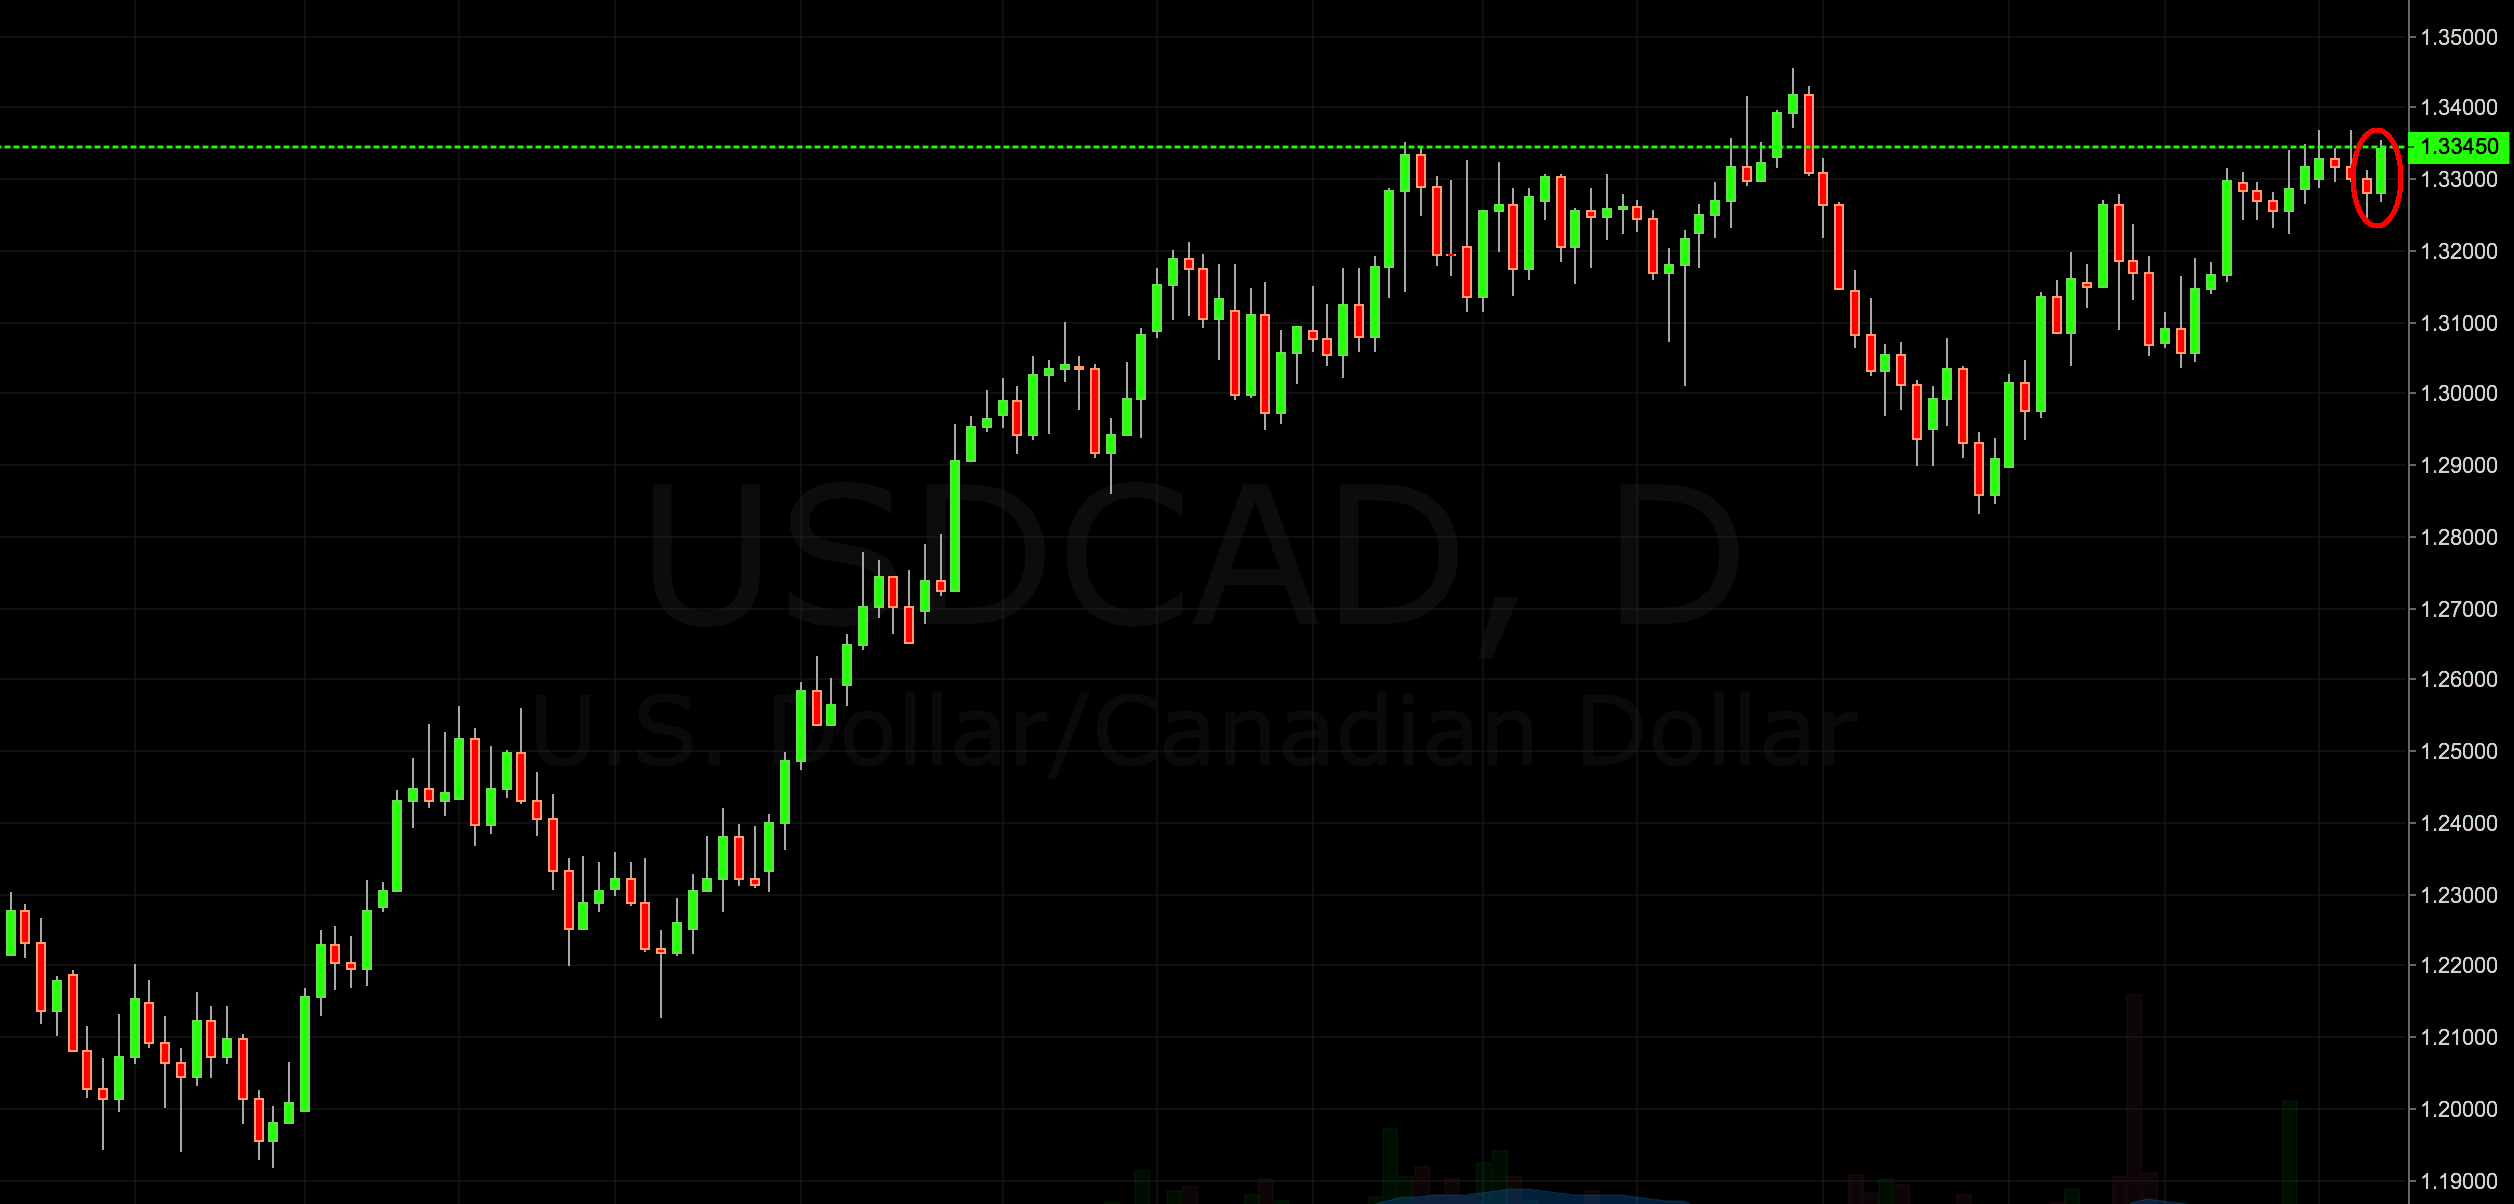 usd/cad trading signal